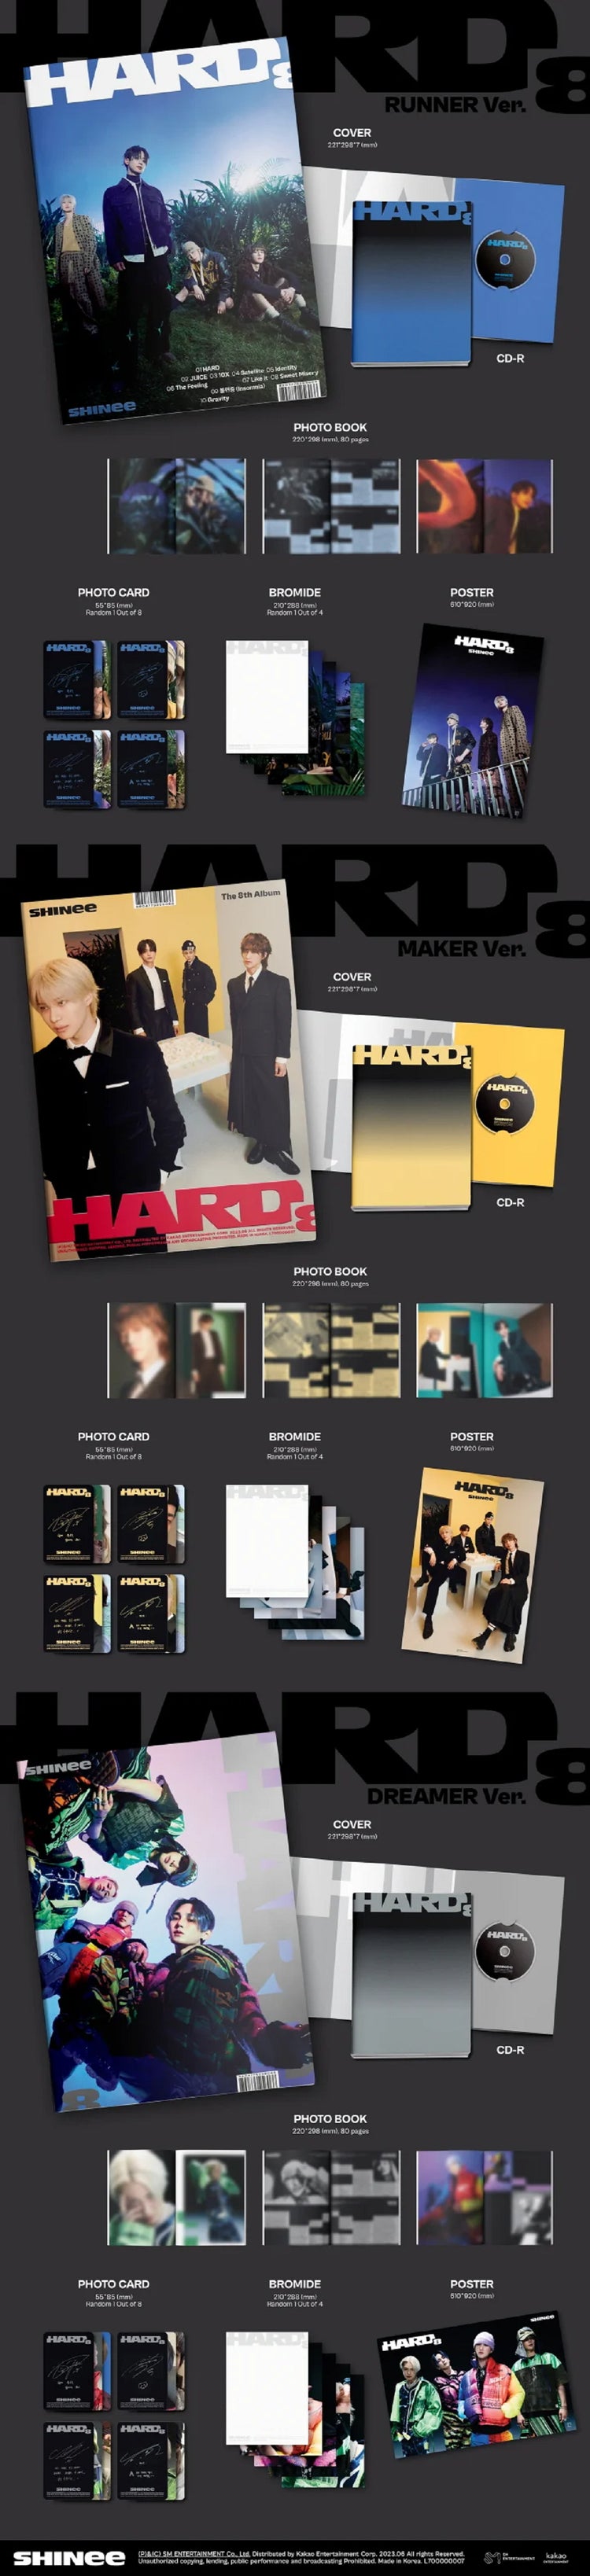 shinee-hard-8th-album-photobook-version-contents